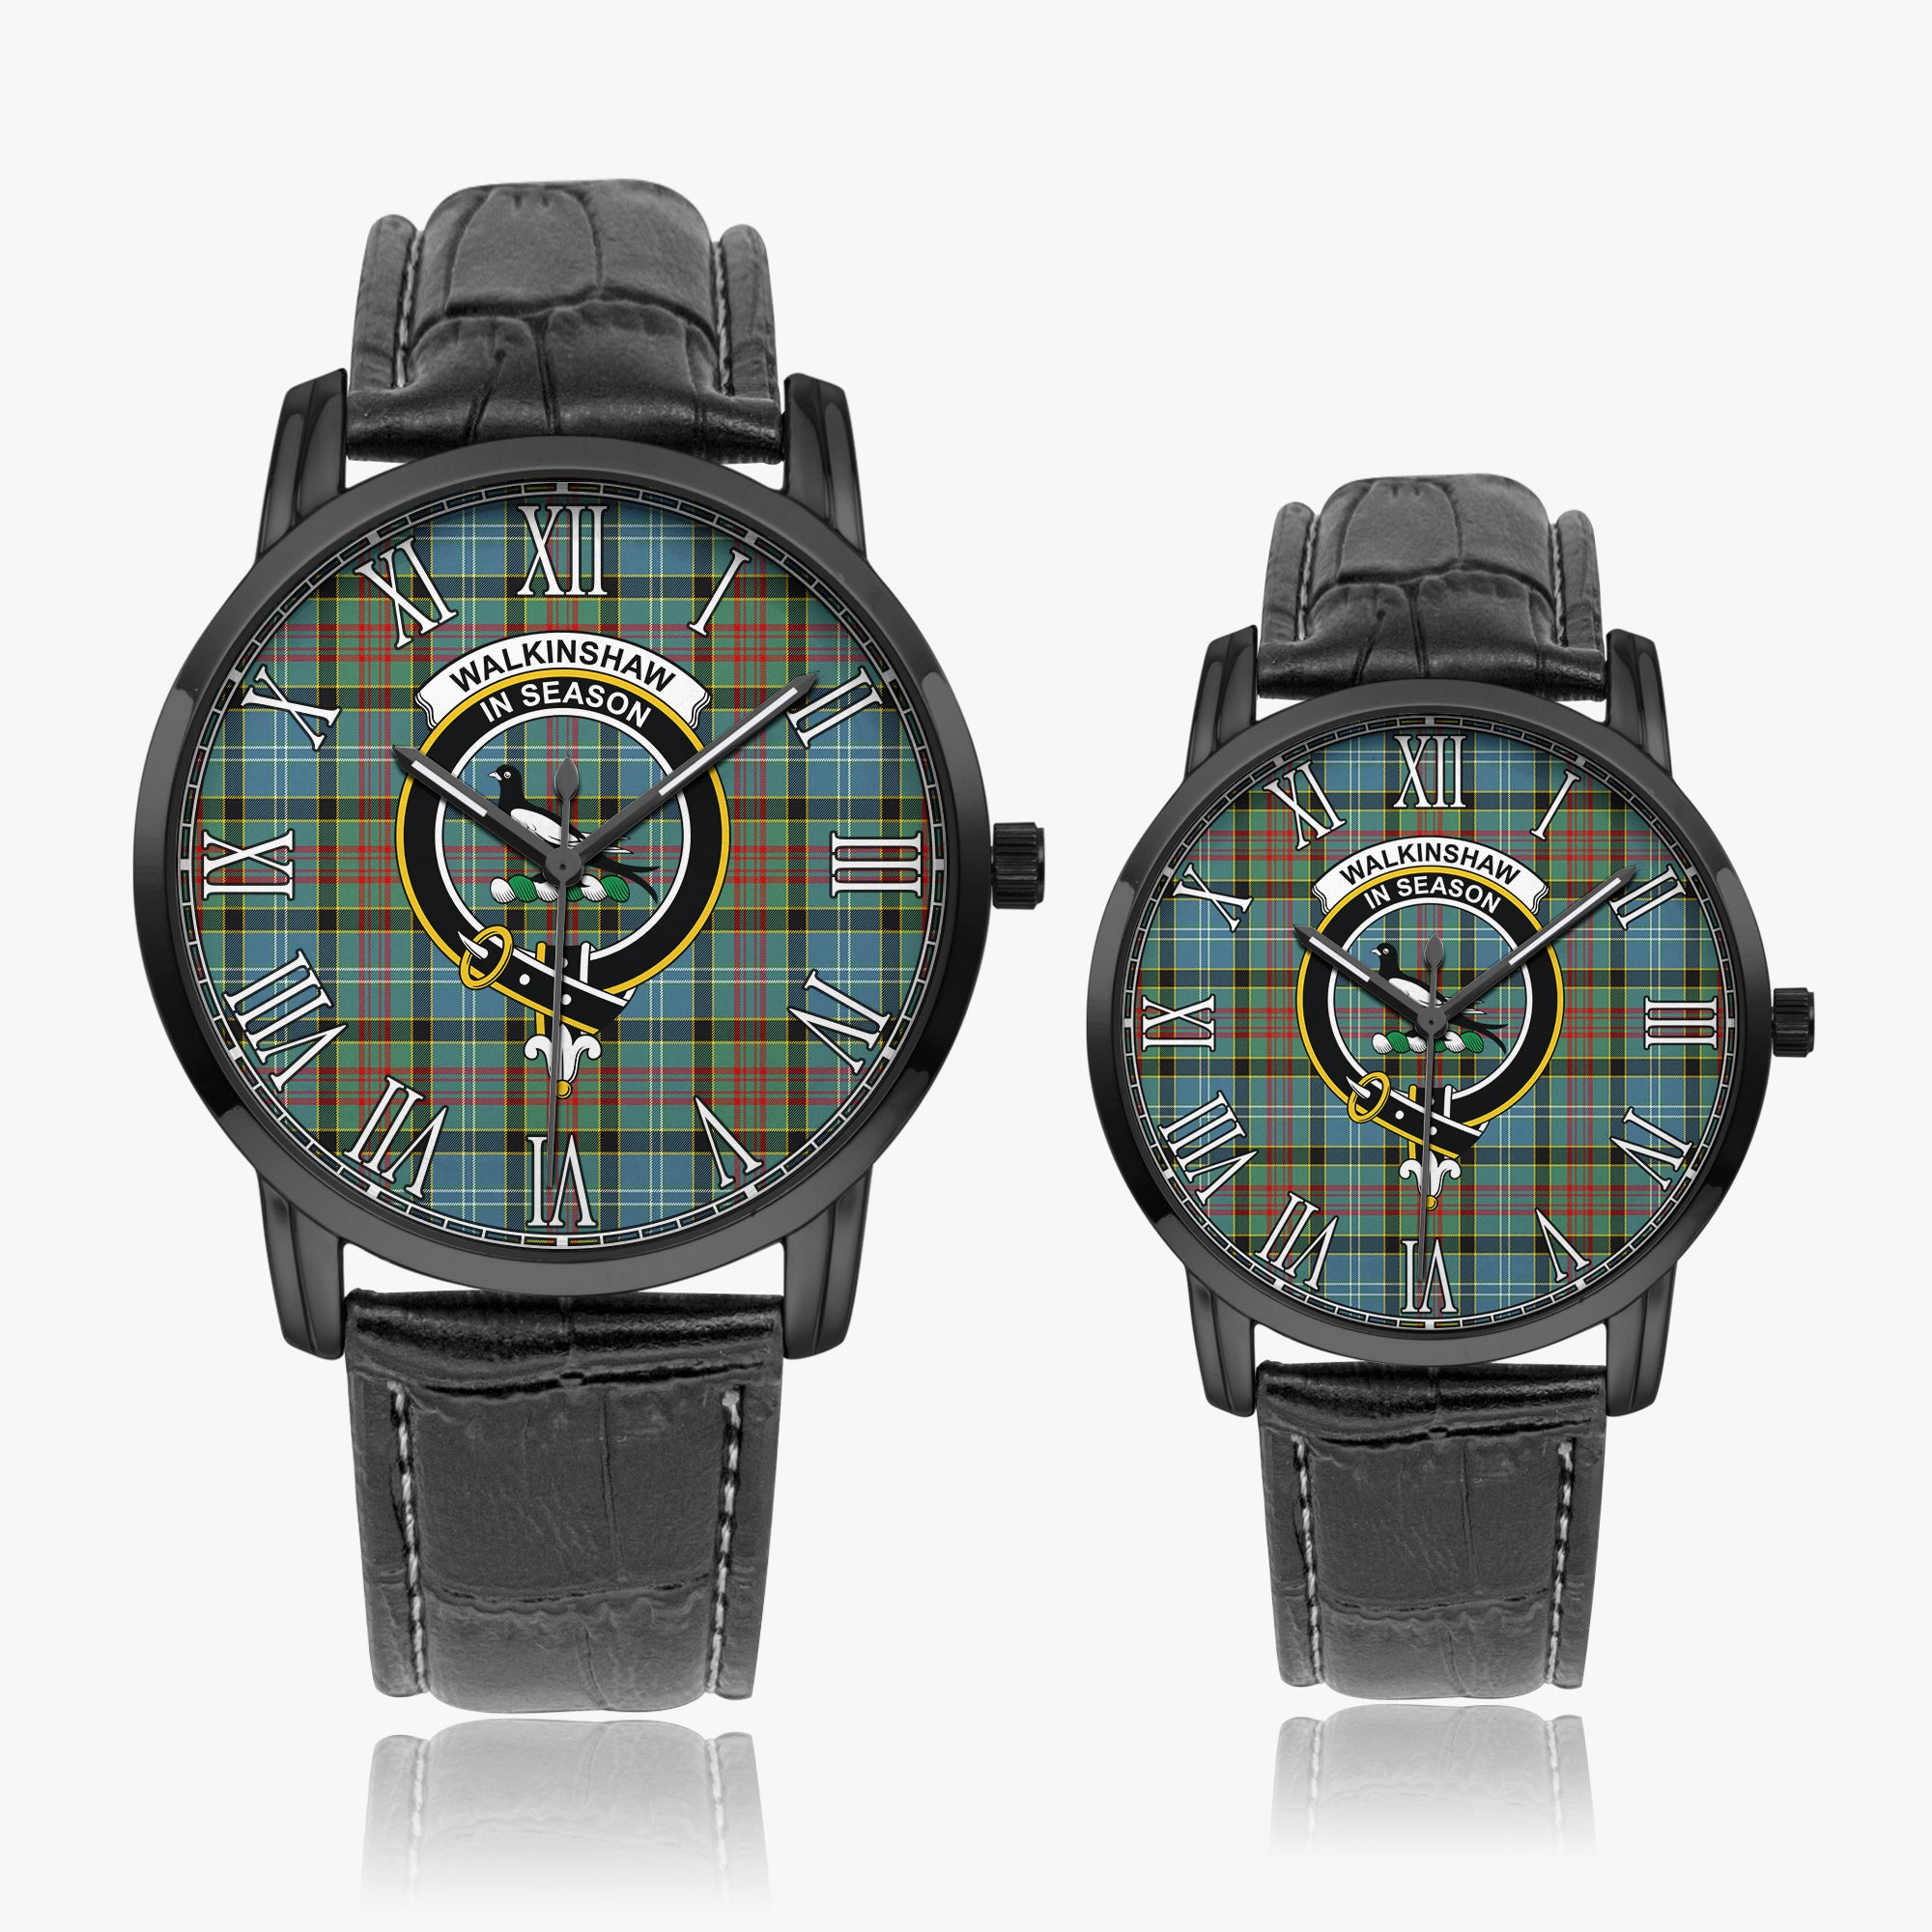 walkinshaw-family-crest-quartz-watch-with-leather-strap-tartan-instafamous-quartz-leather-strap-watch